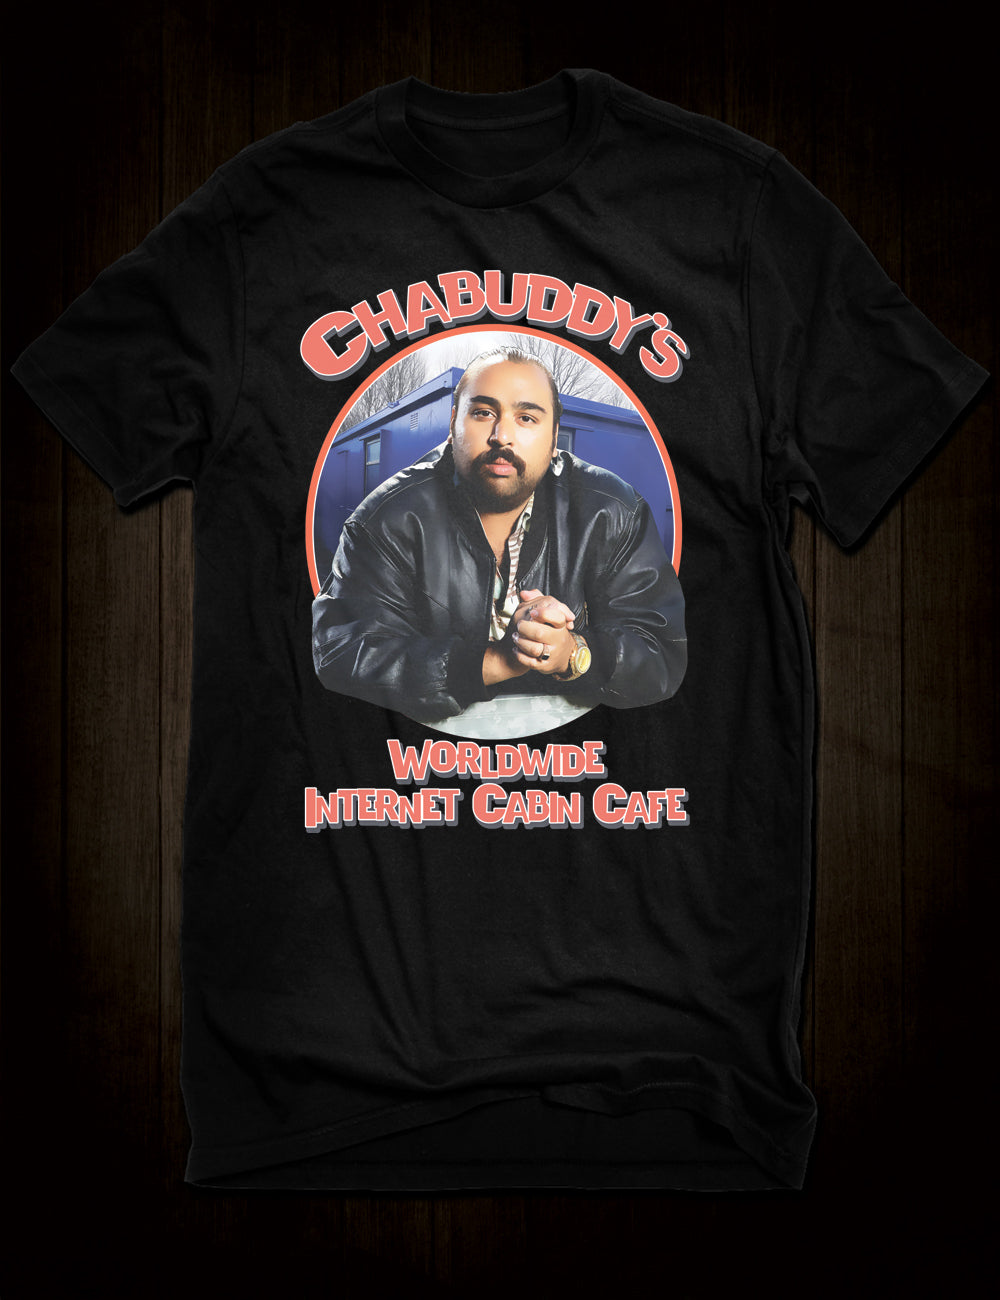 Chabuddy G Worldwide Internet Cabin Cafe T-Shirt